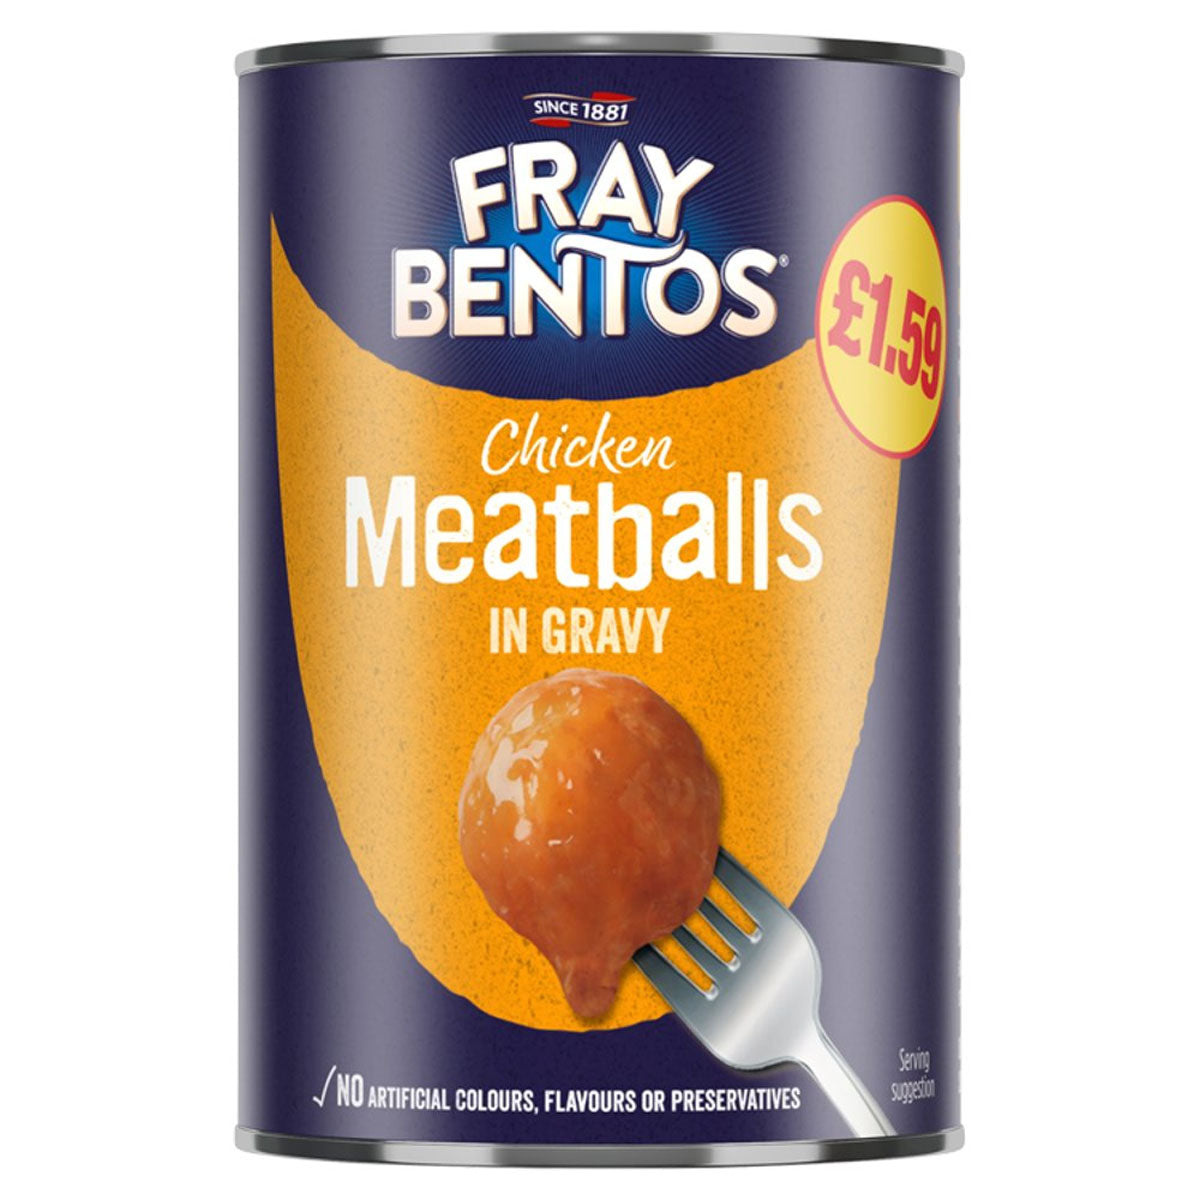 Fray Bentos - Chicken Meatballs in Gravy - 380g - Continental Food Store